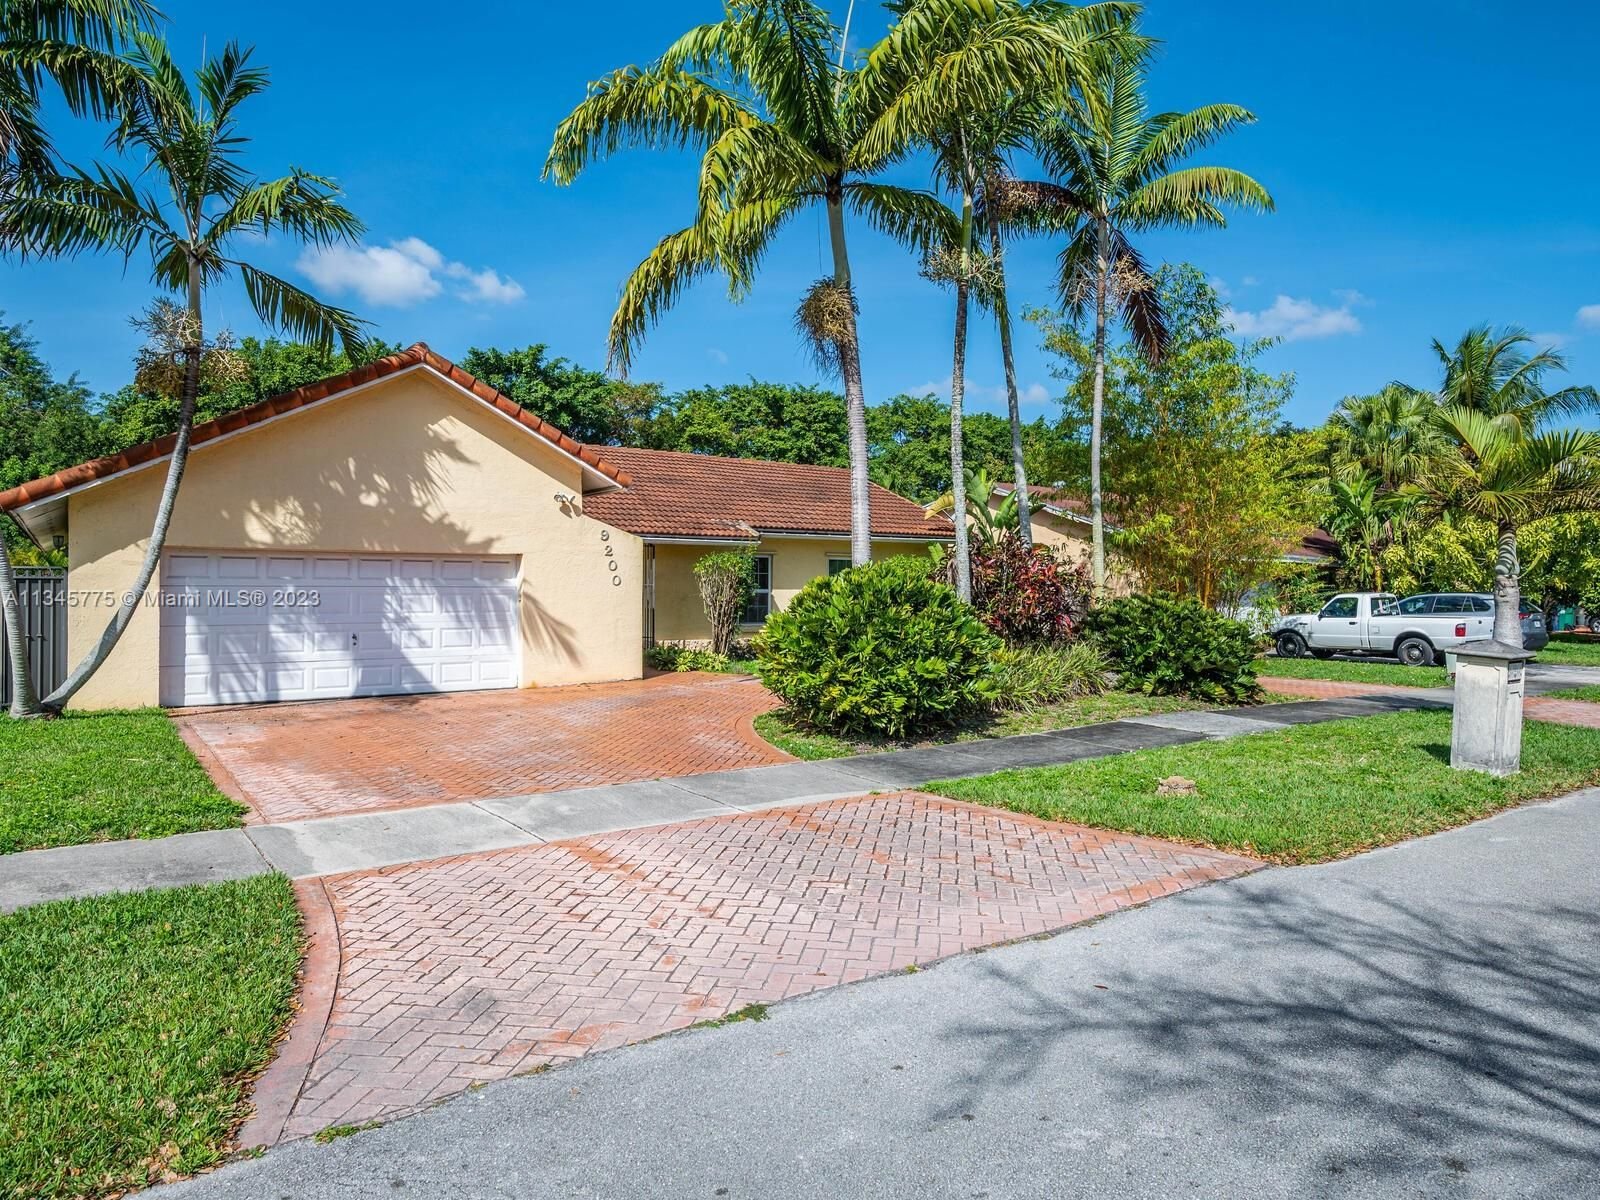 Real estate property located at 9200 134th Pl, Miami-Dade County, Miami, FL